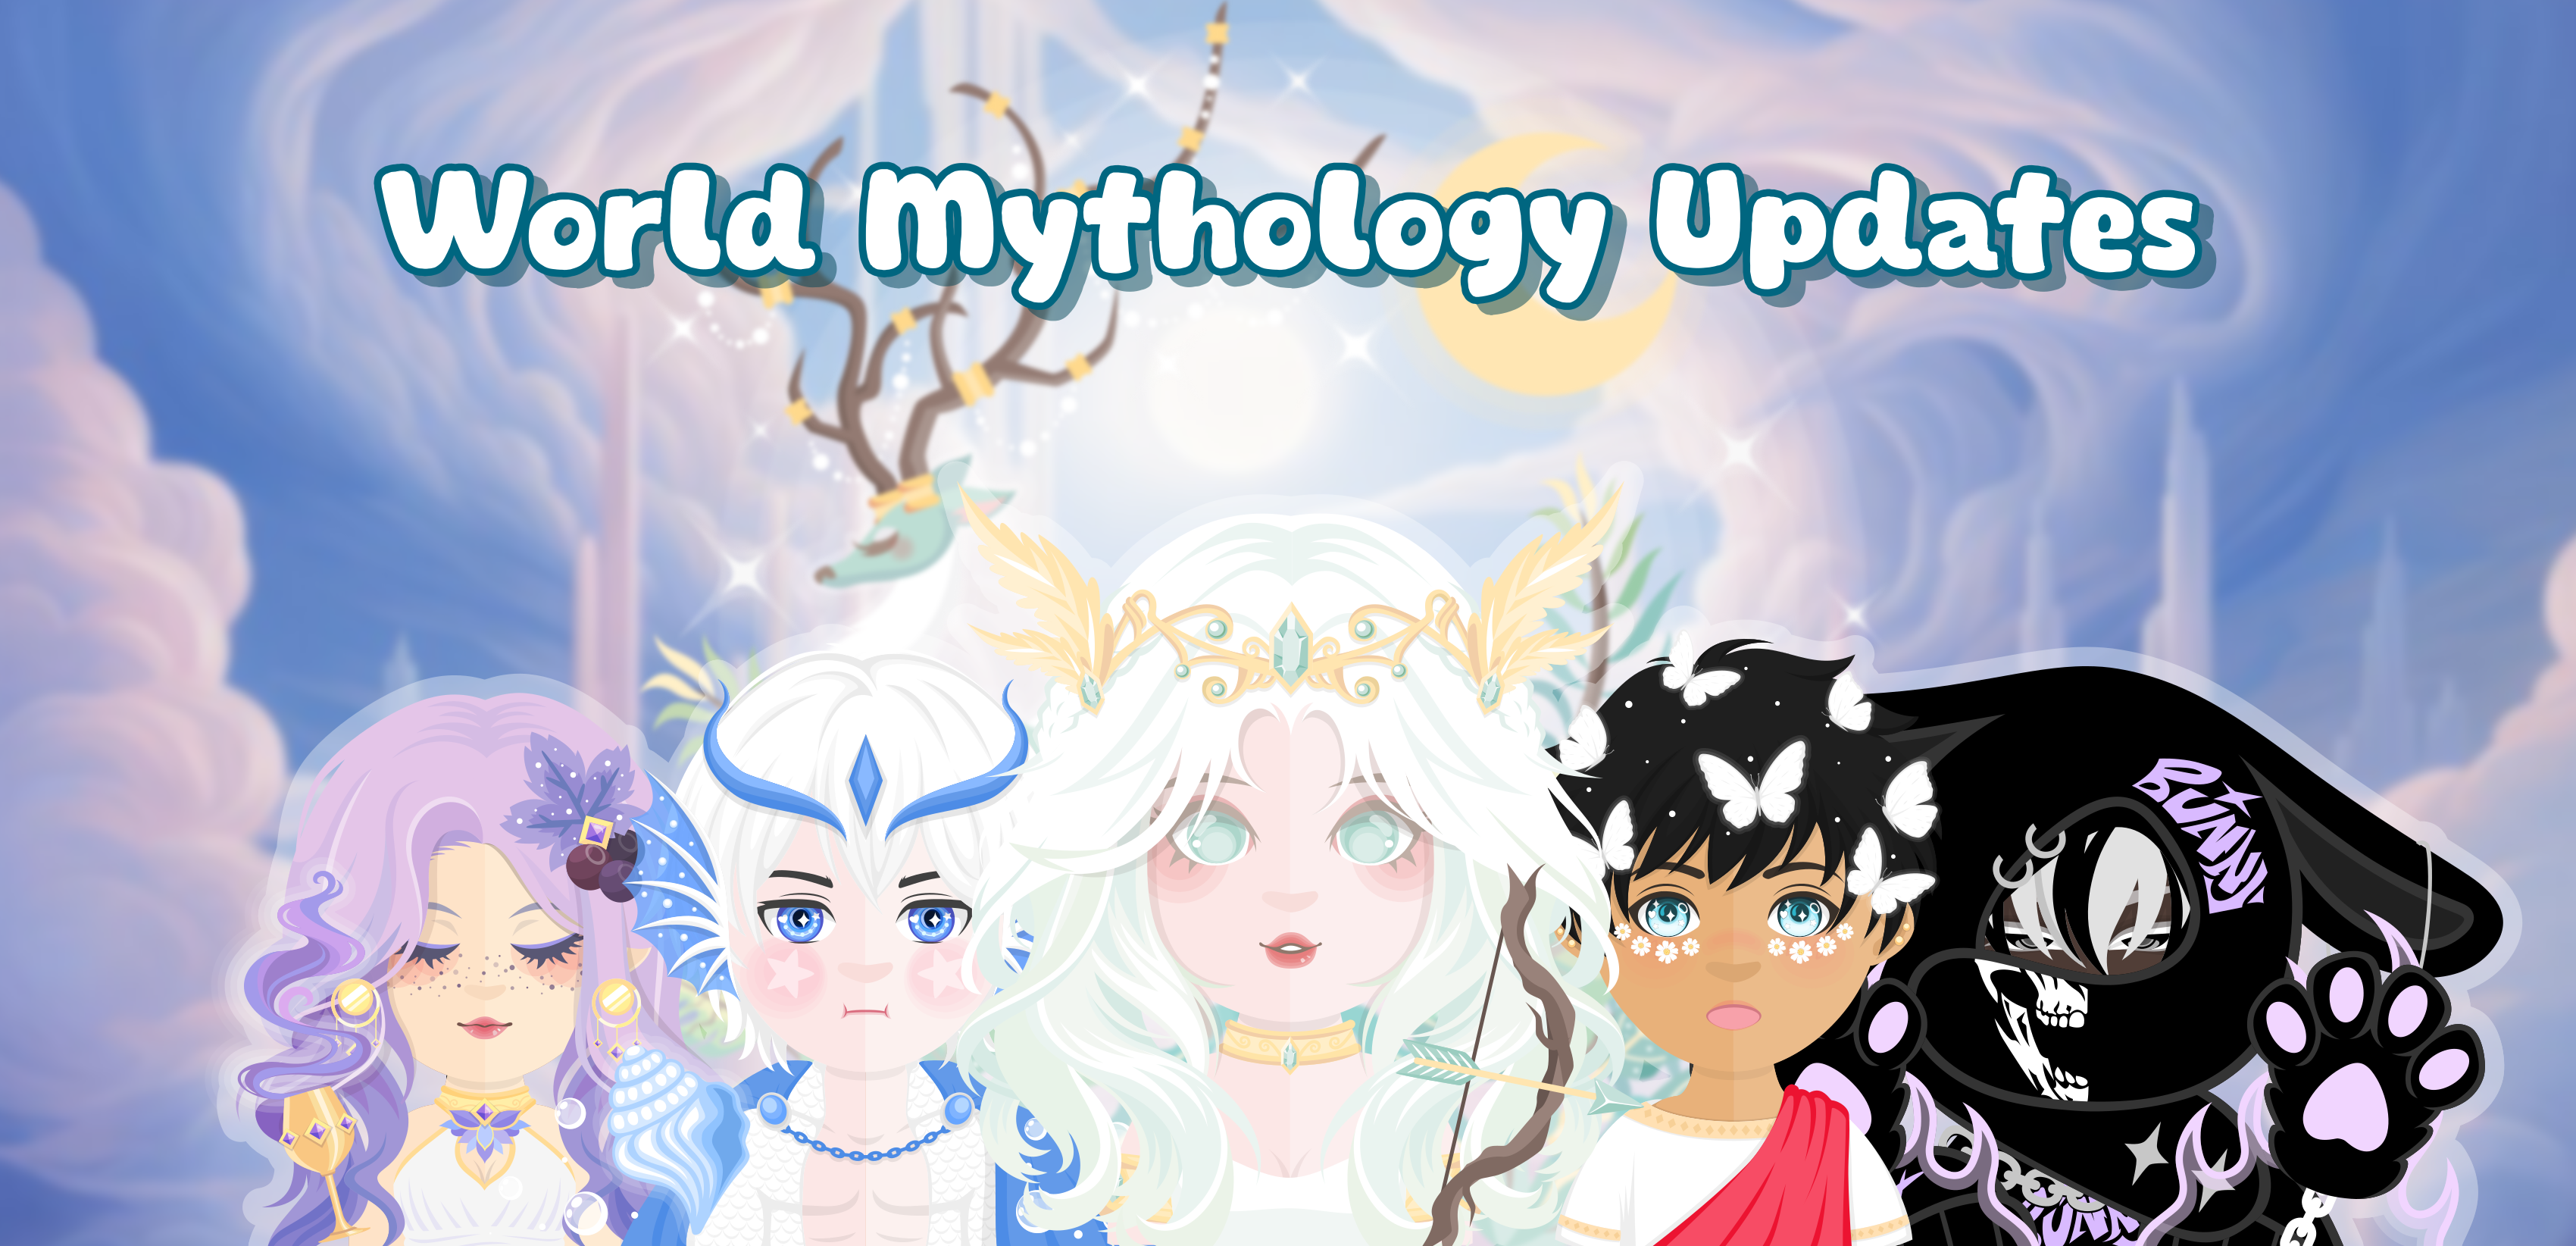 World mythologies update banner